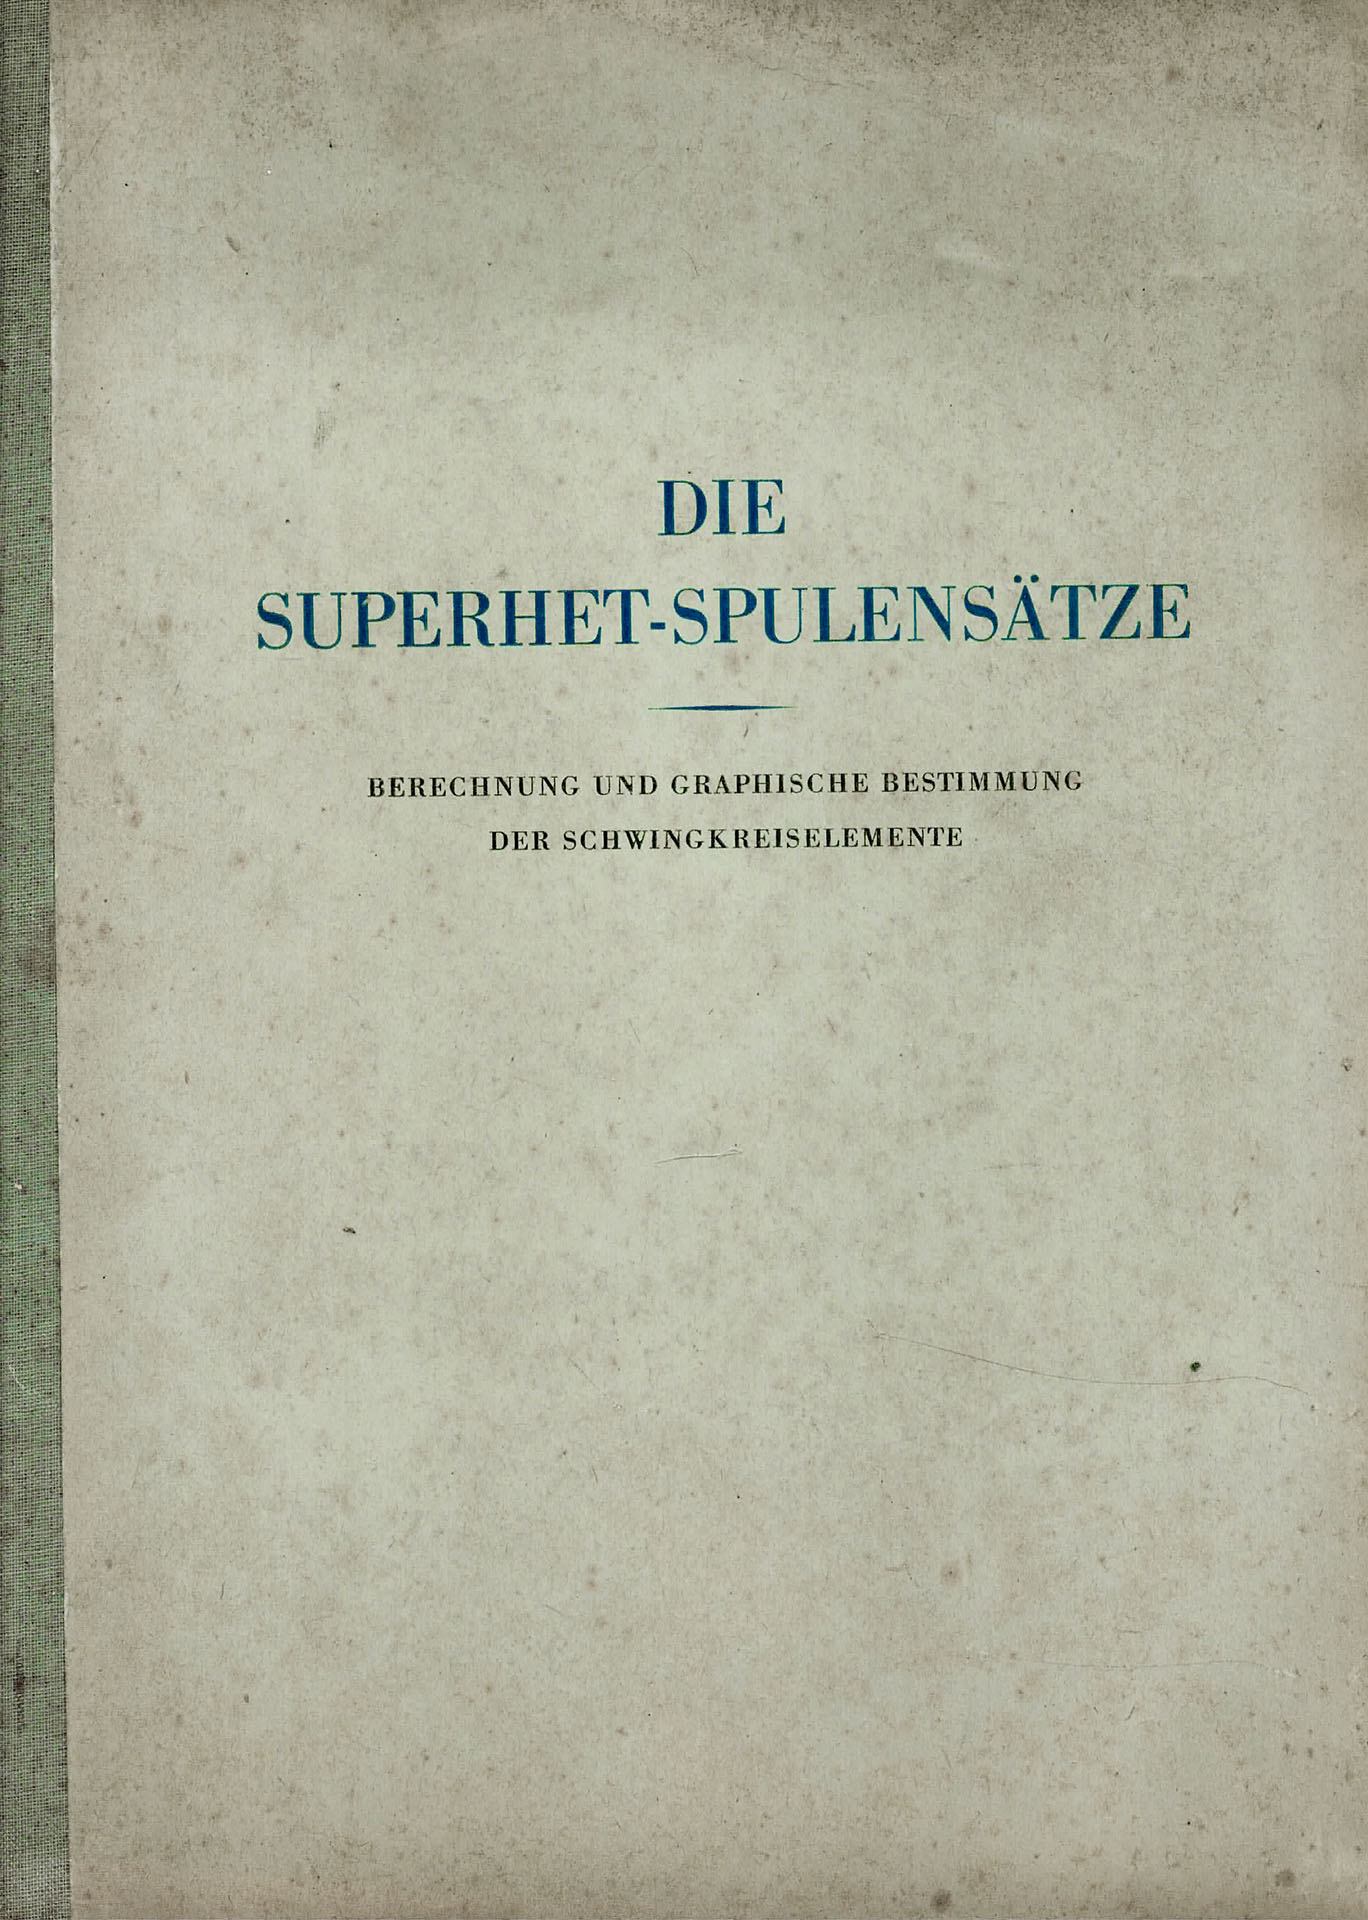 Die Superhet - Spulensätze - Ing Koster, H. E.